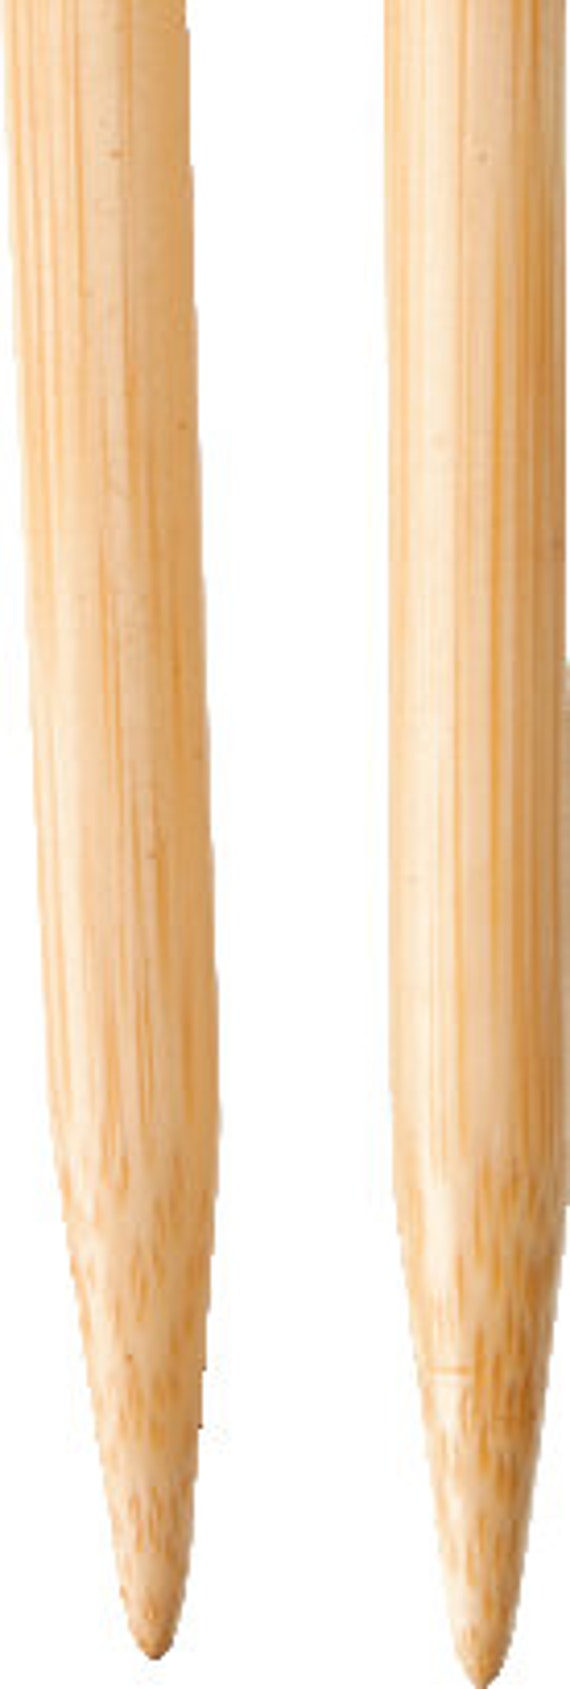 ChiaoGoo Bamboo 40 inch (100 cm) US 13 (9.00mm) Circular Knitting Needles